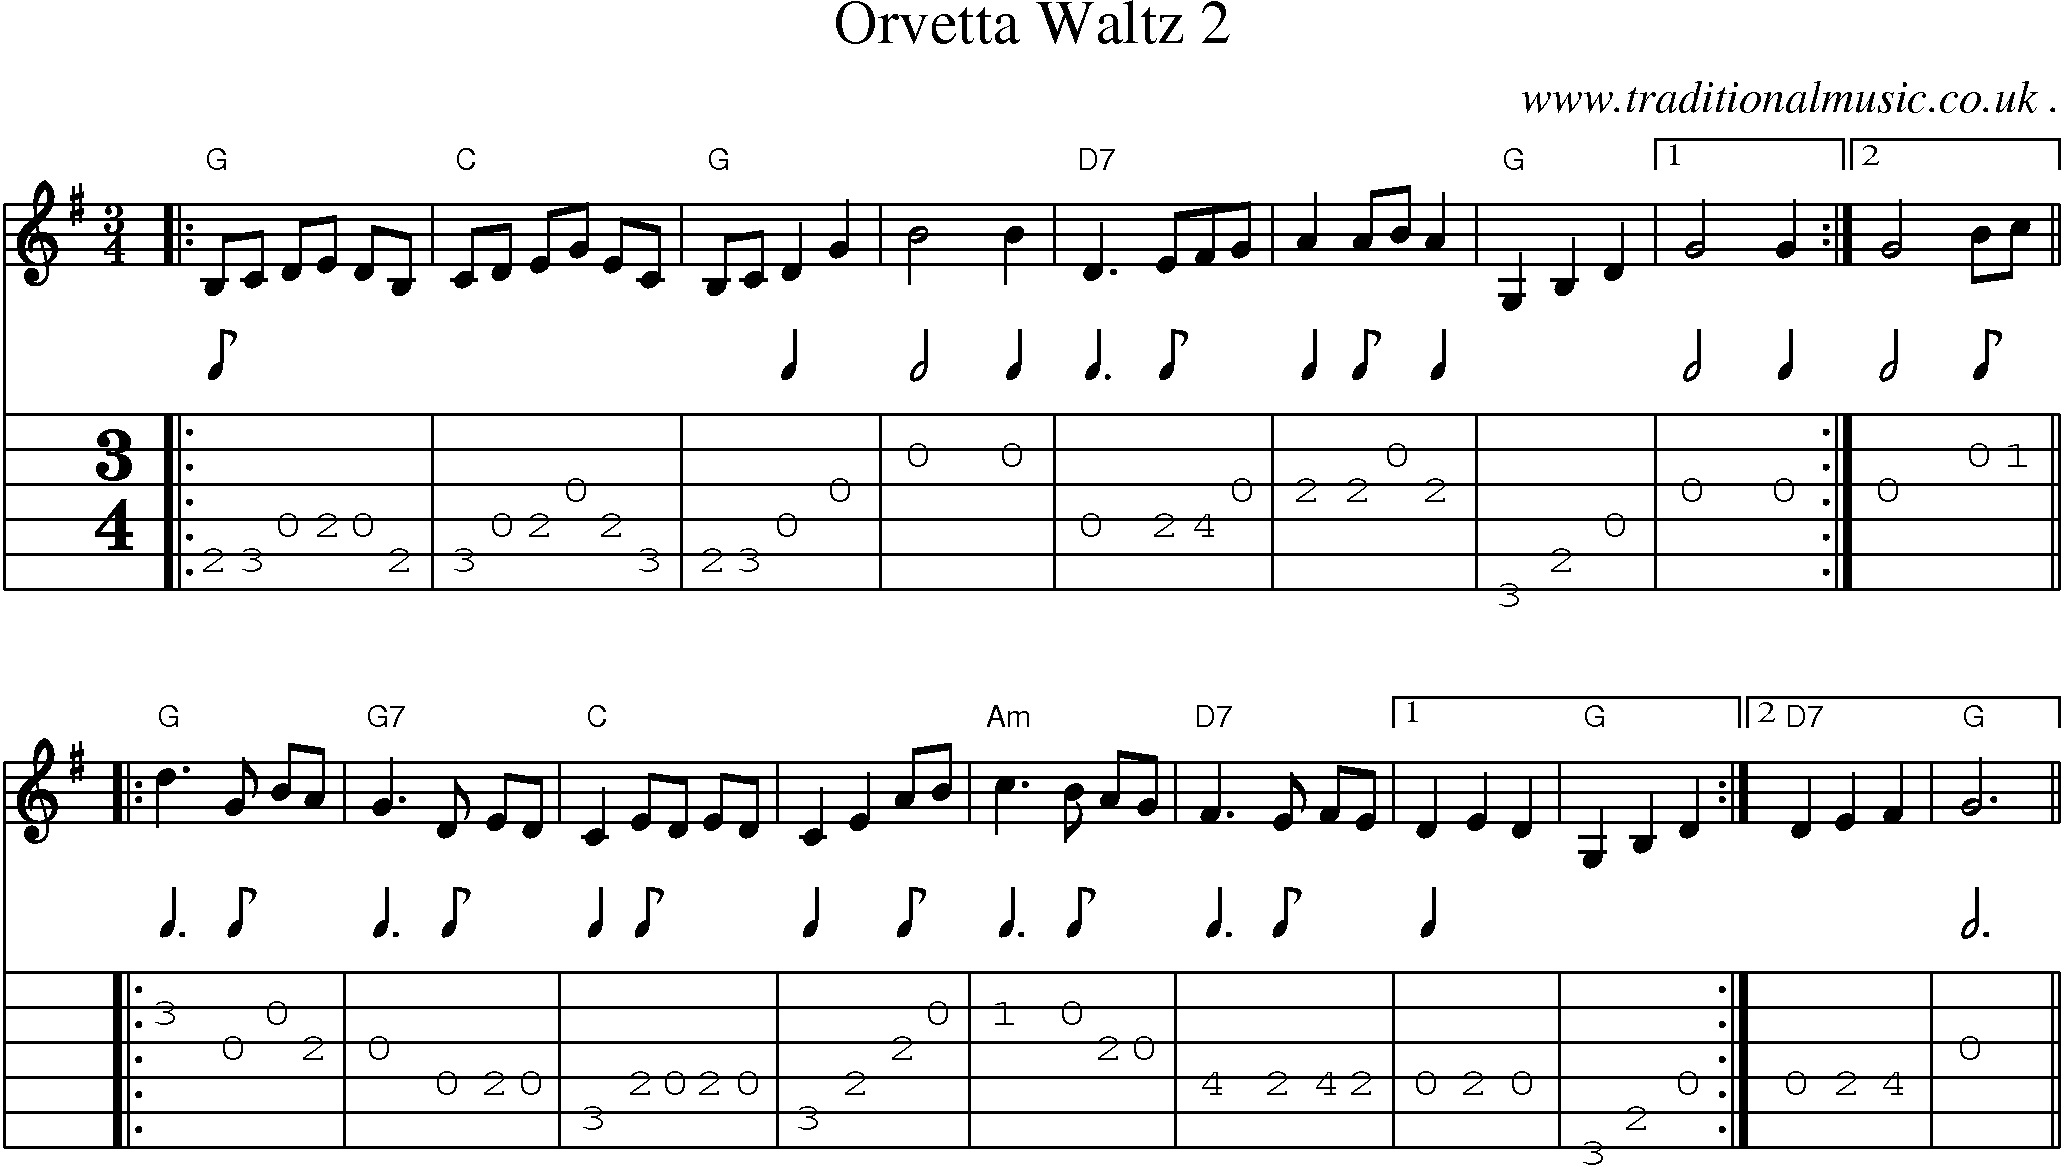 Music Score and Guitar Tabs for Orvetta Waltz 2